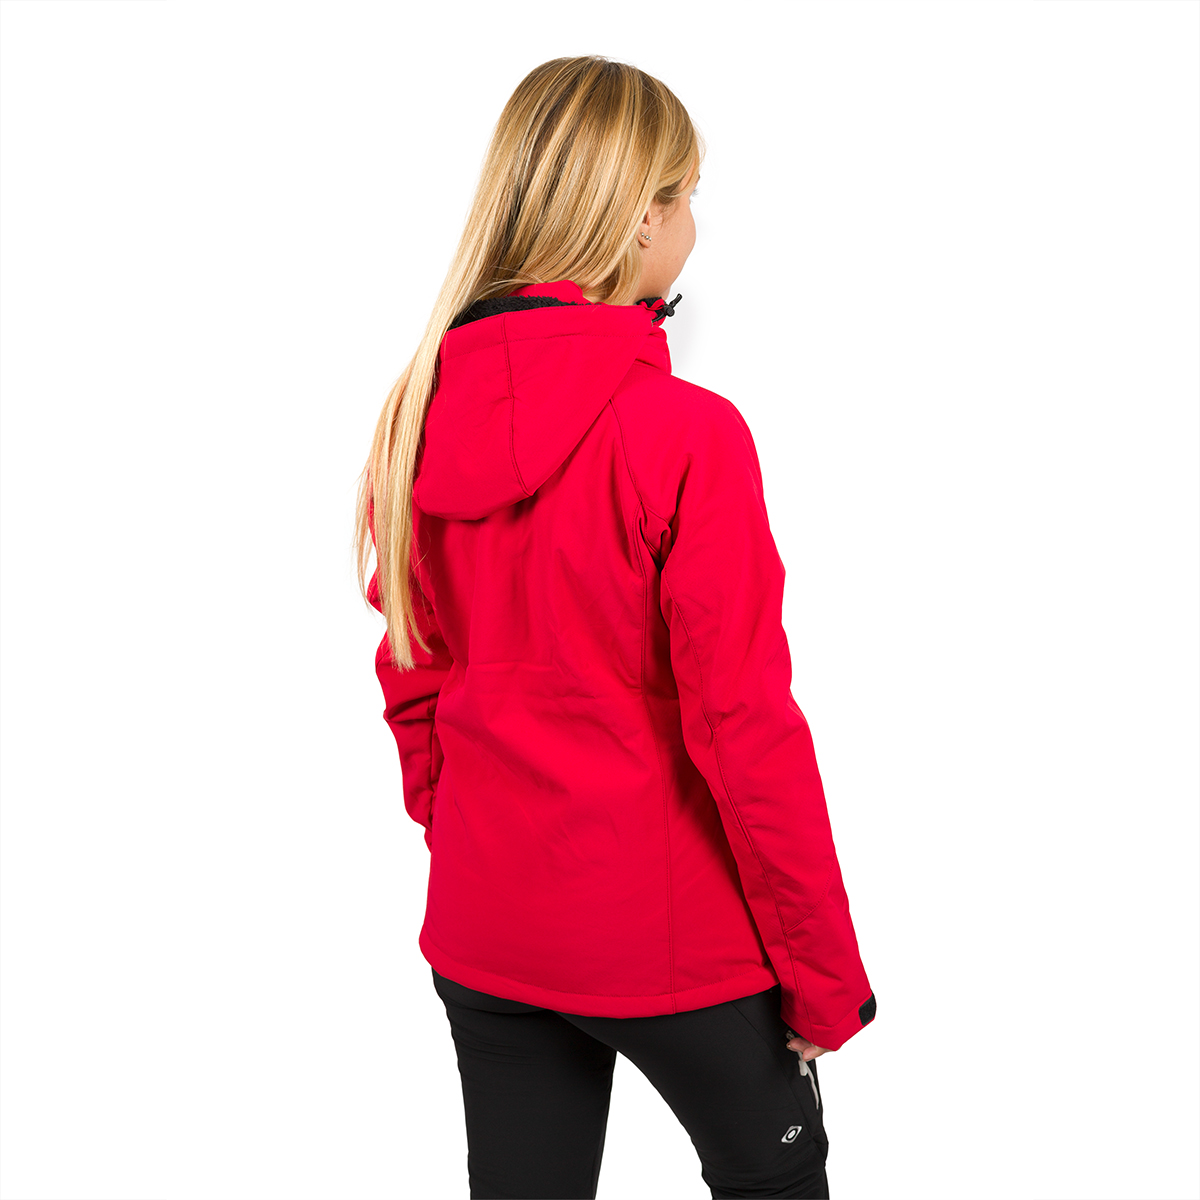 Izas Oshawa Women's Hooded Softshell Jacket (Medium, Red/Red) - image 4 of 4